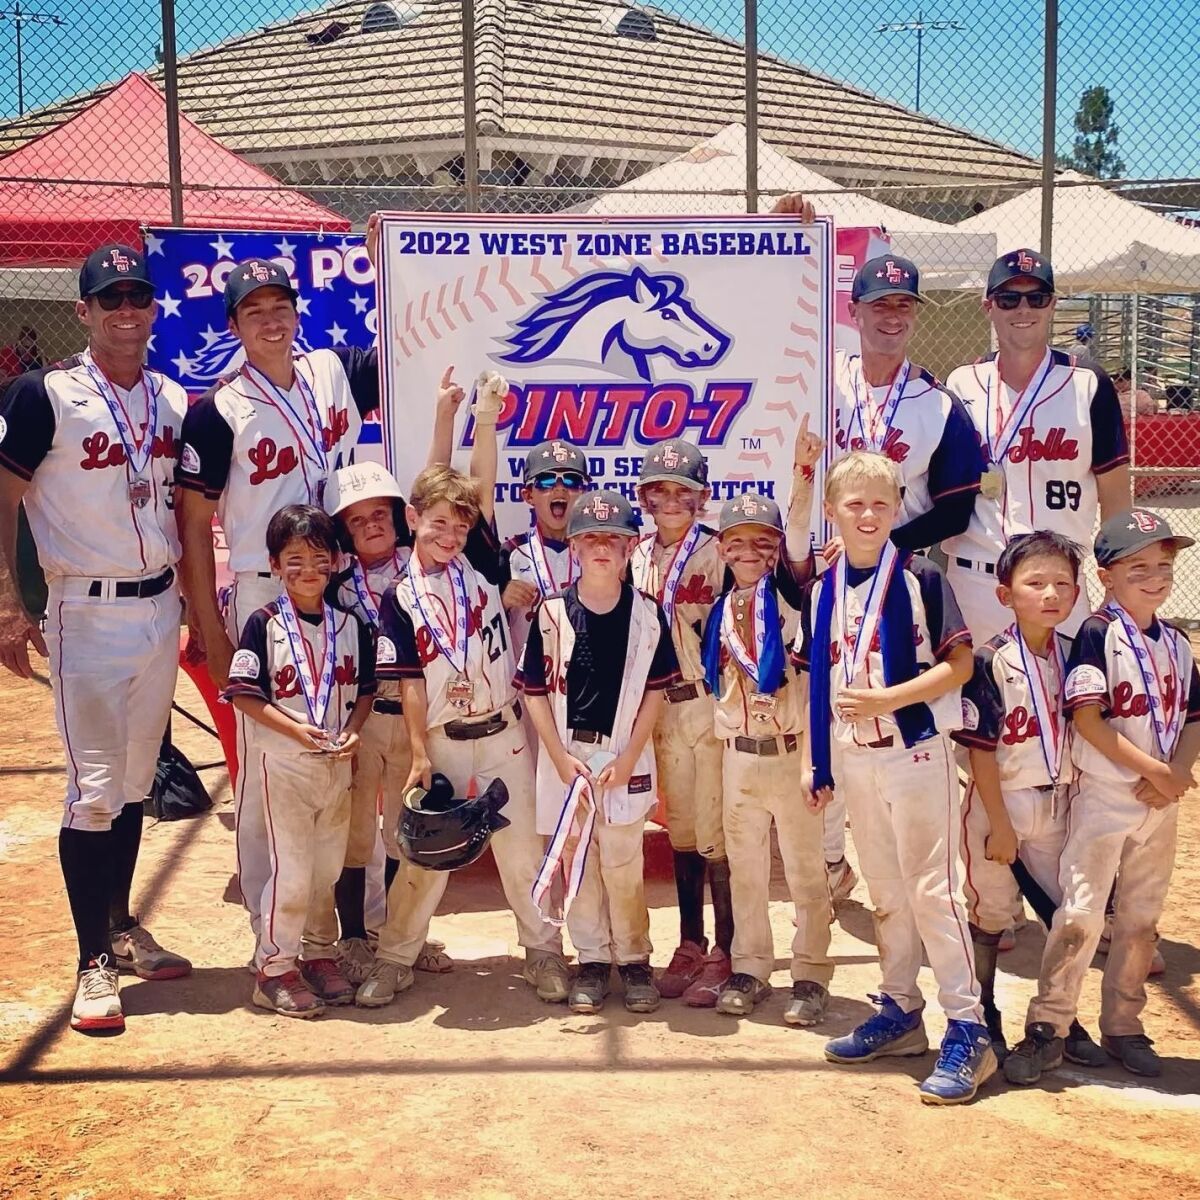 La Jolla Youth Baseball teams have had a lot of success recently.